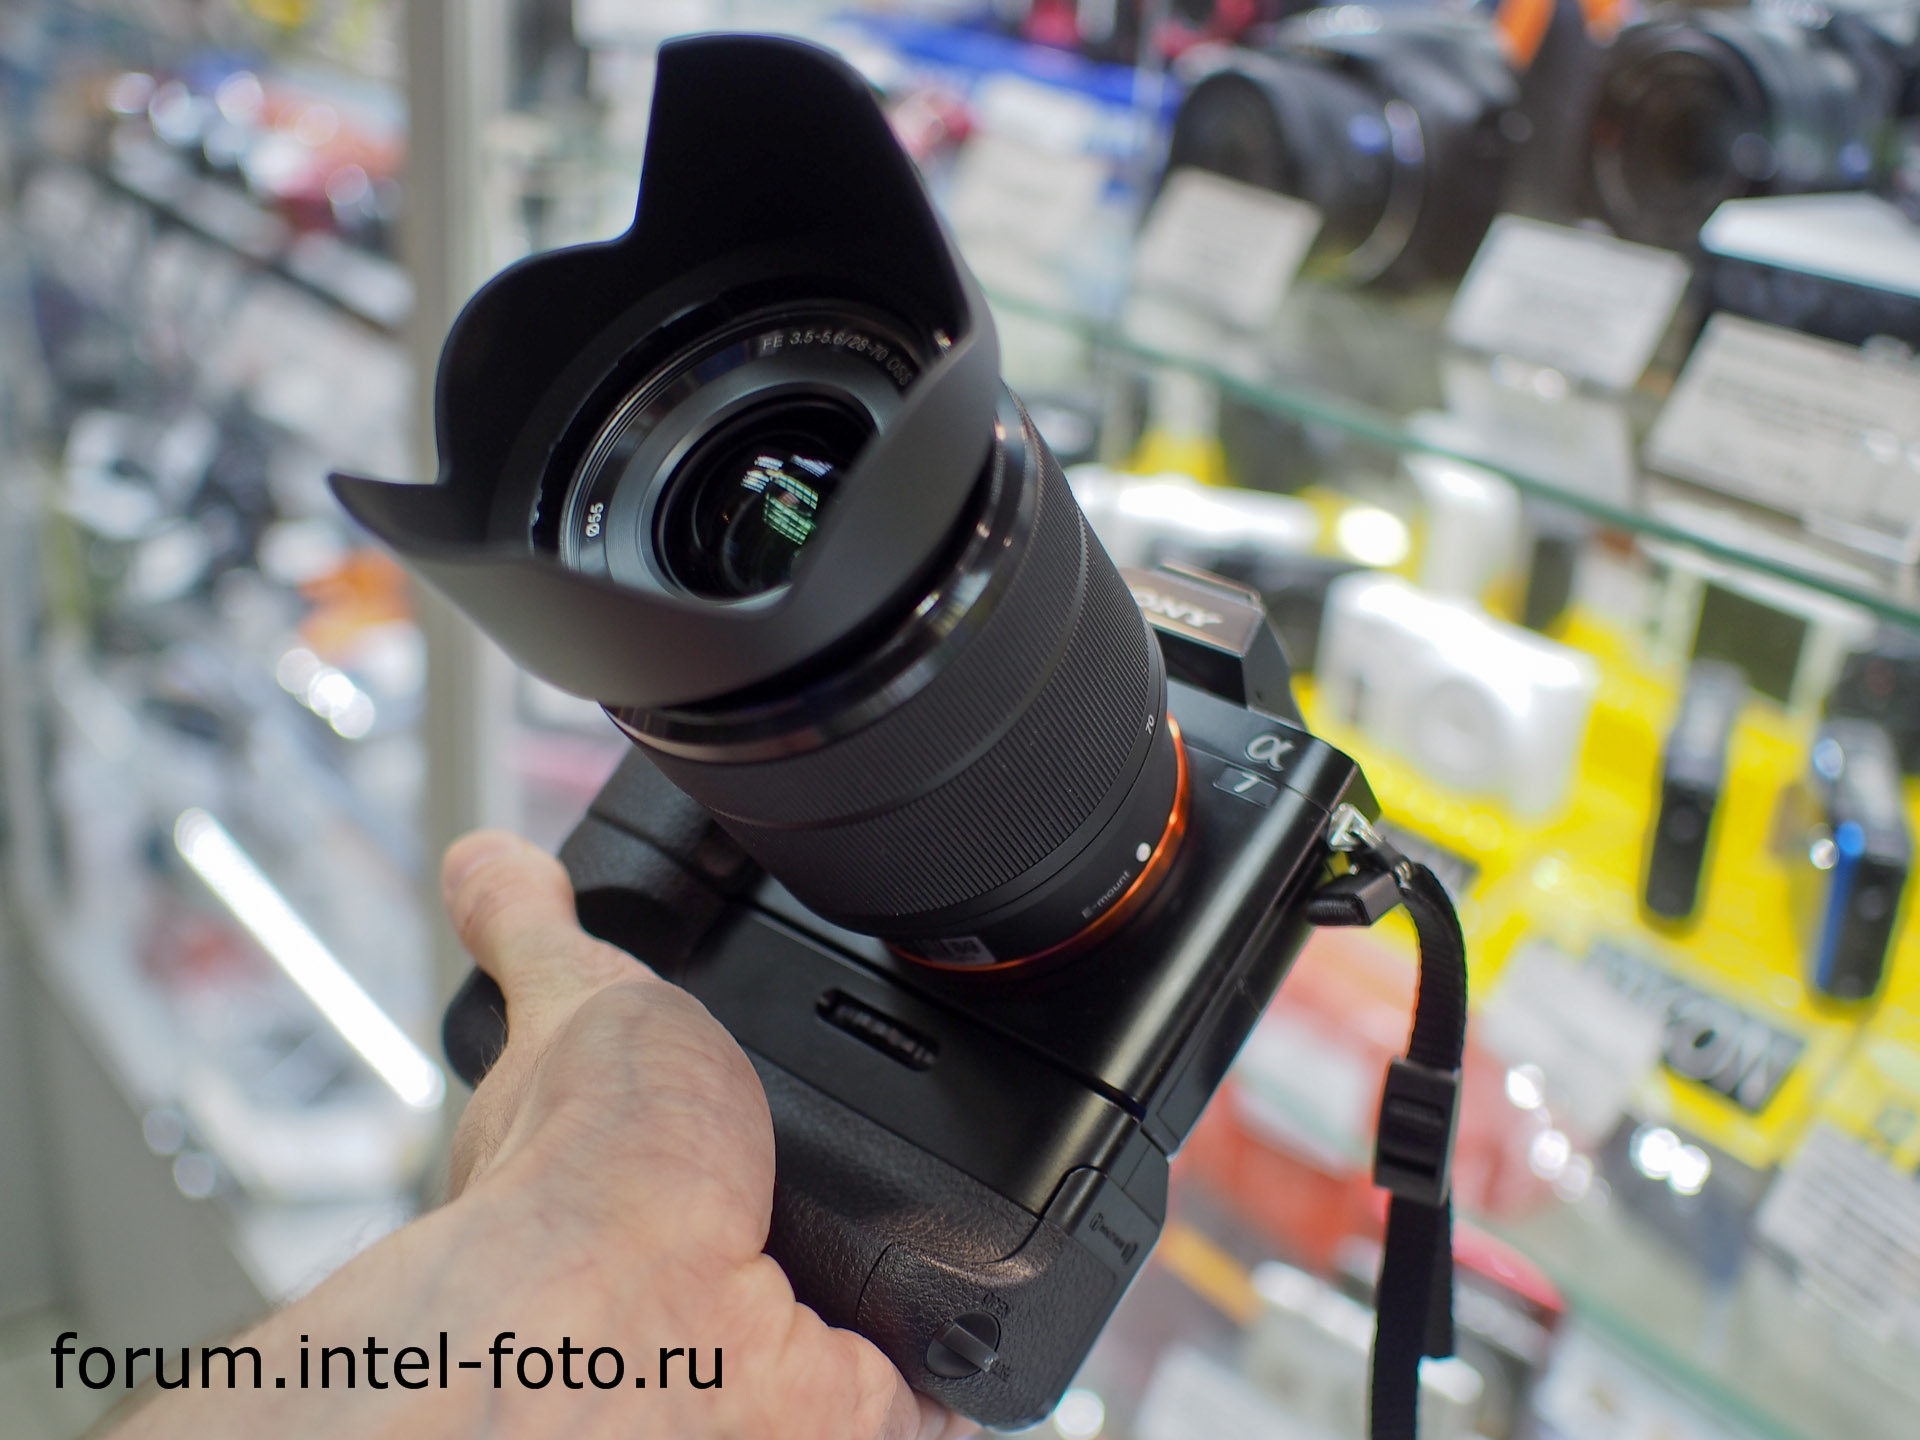 http://www.intel-foto.ru/content/publication/forum-tst/2014/2014-05/sony-a7/preview/17.jpg